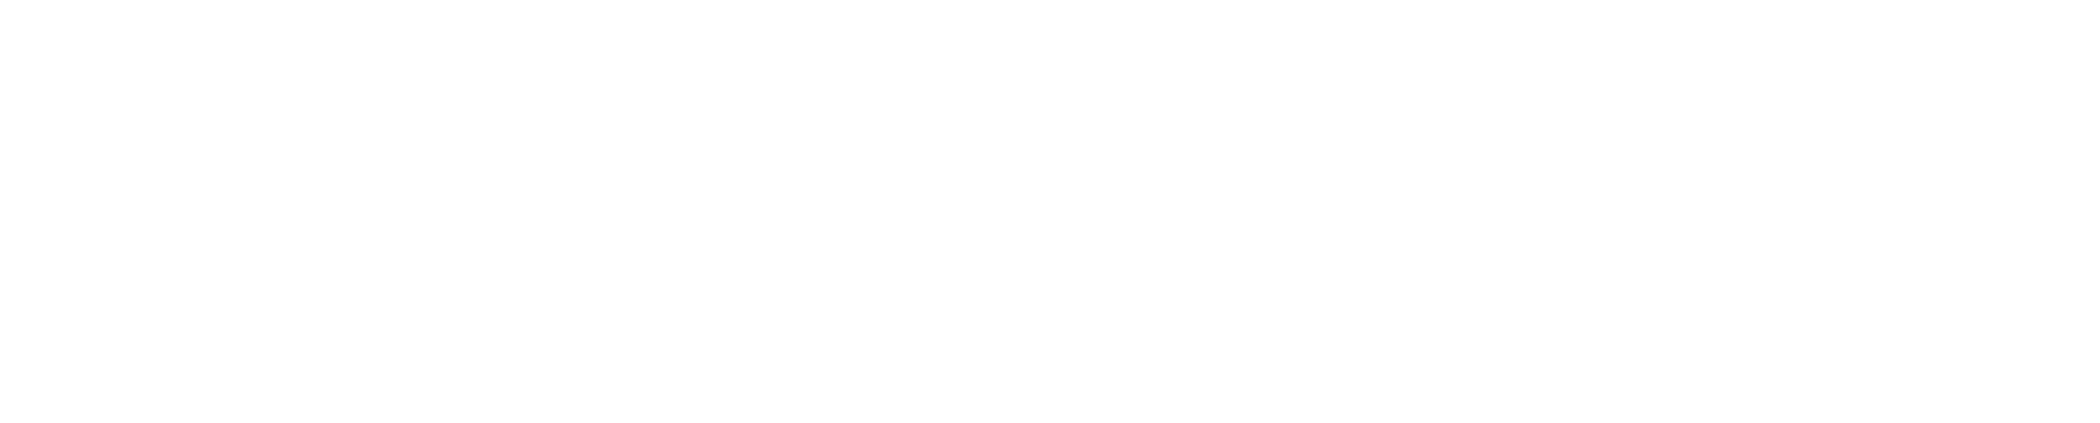 WooCommerce-logo-2